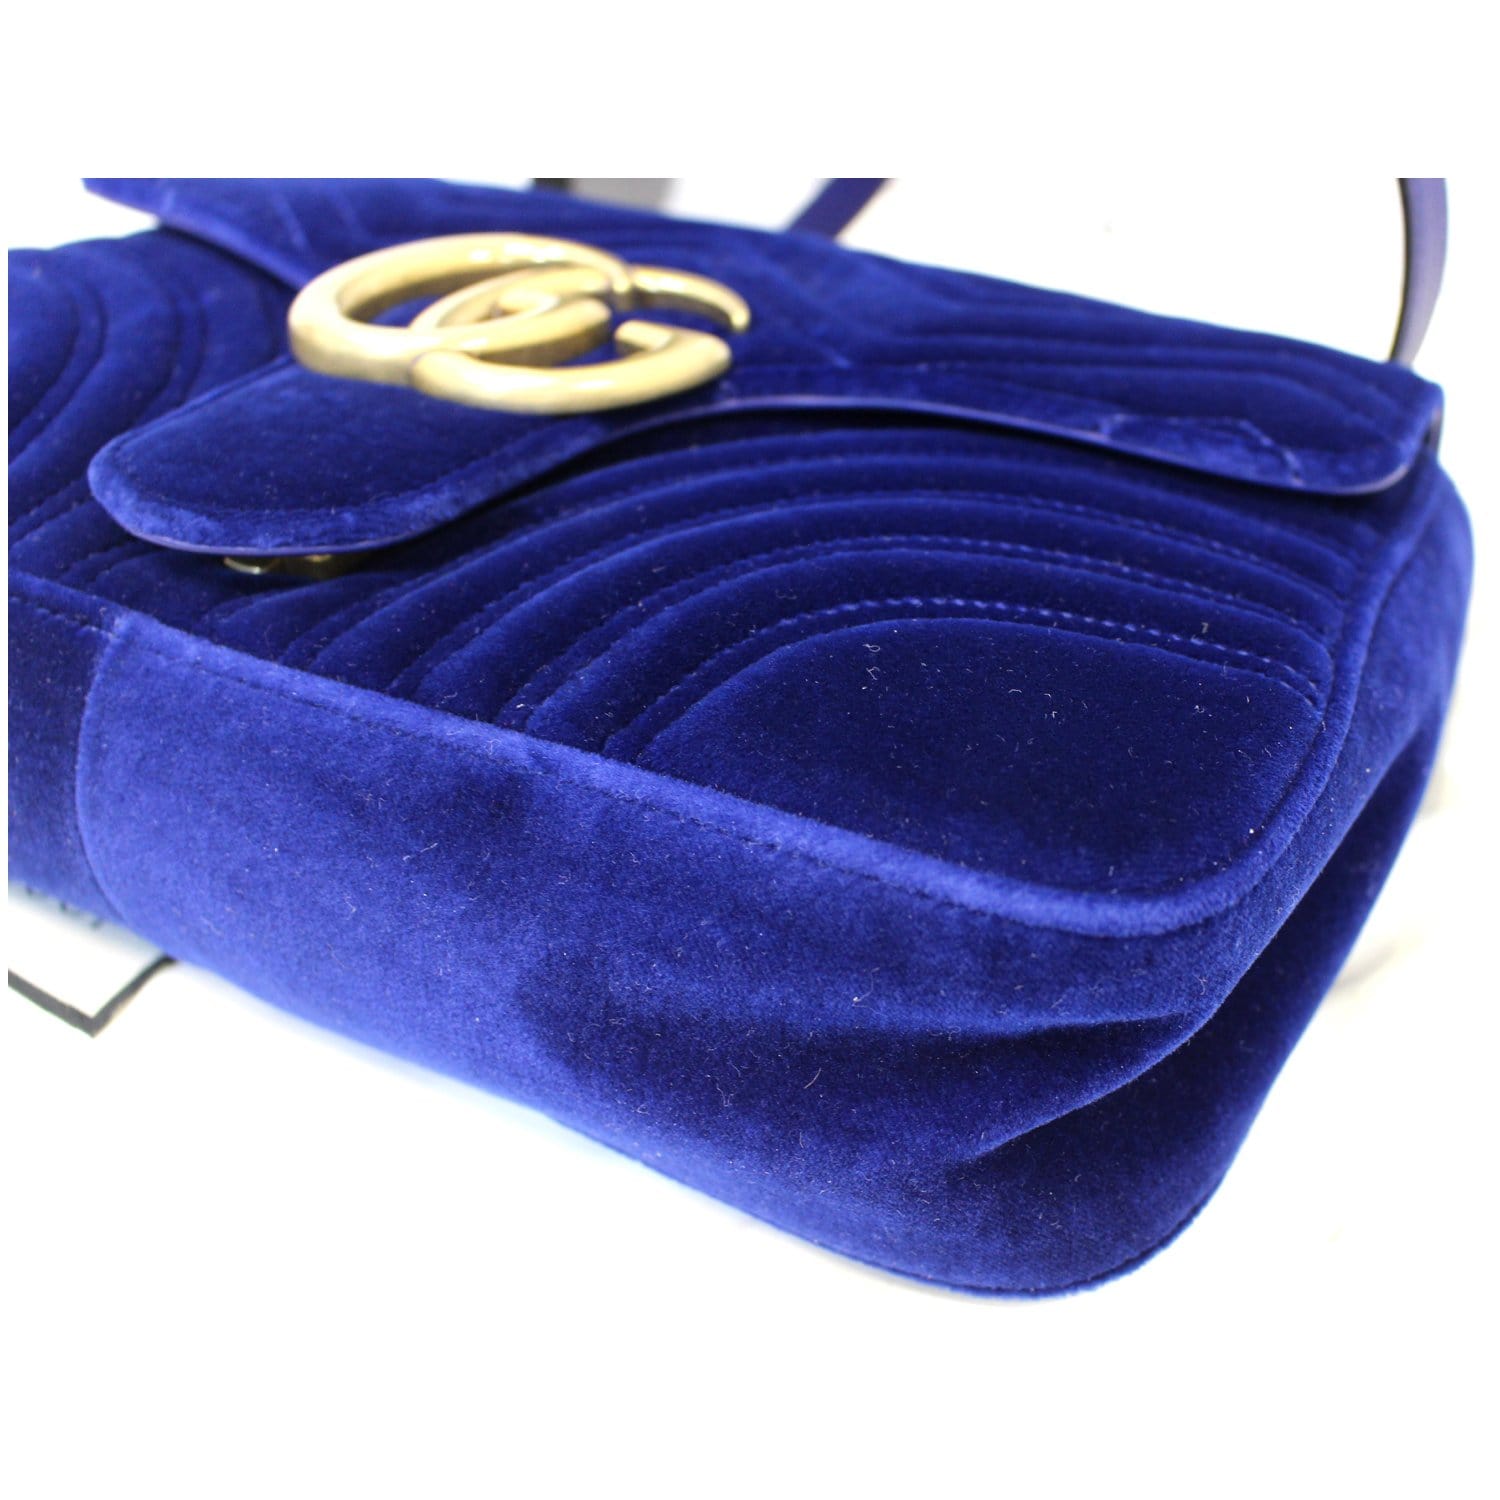 Gucci Purple Velvet Medium GG Marmont Shoulder Bag Gucci